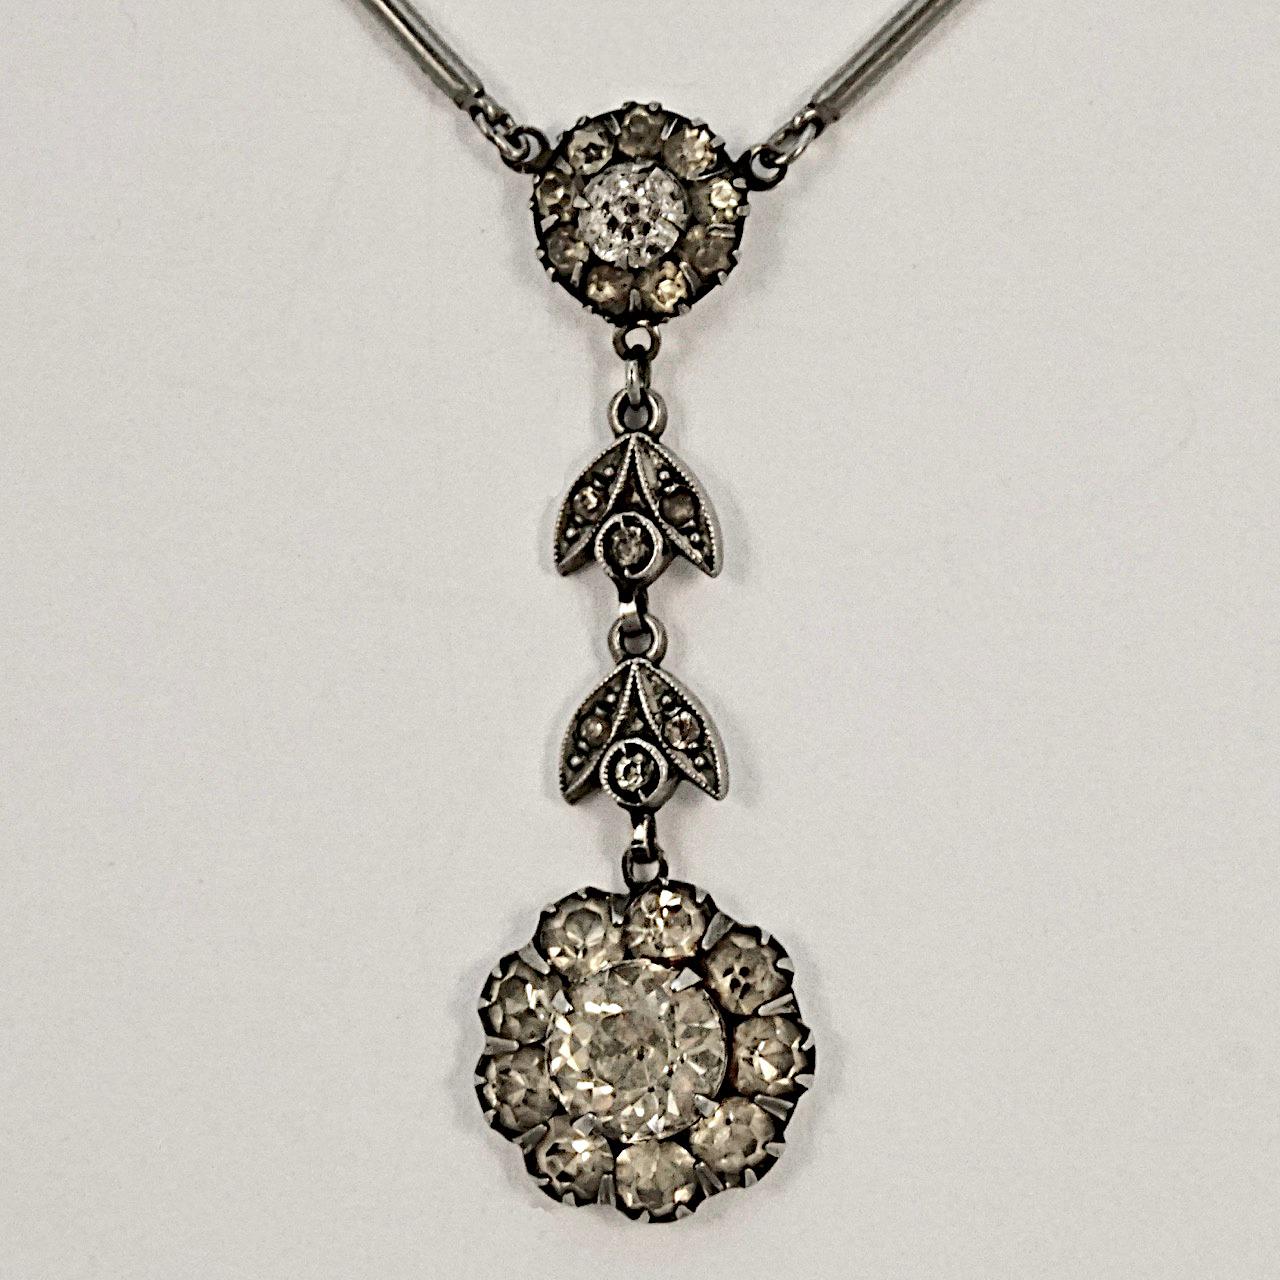 Art Deco silver tone rod design necklace,  with a lovely paste drop pendant. Measuring length 43.2 cm / 17 inches, and the paste drop is length 4.1 cm / 1.6 inches.

This is a beautiful paste drop necklace from the Art Deco era.